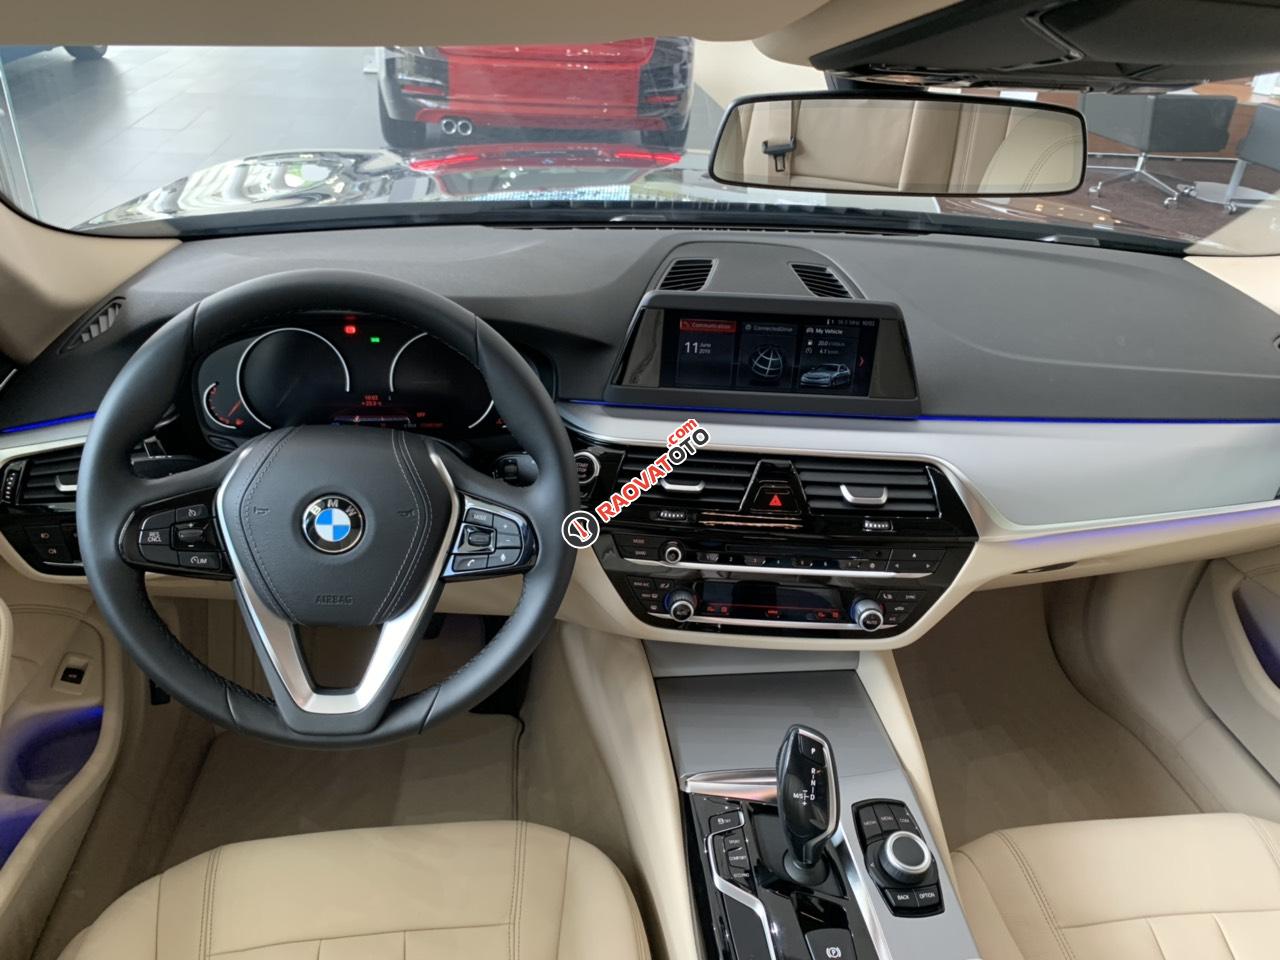 [BMW Quận 2] BMW 520i All new, giảm tiền mặt, bảo hiểm vật chất, bảo dưỡng. Hotline PKD 0908 526 727-1